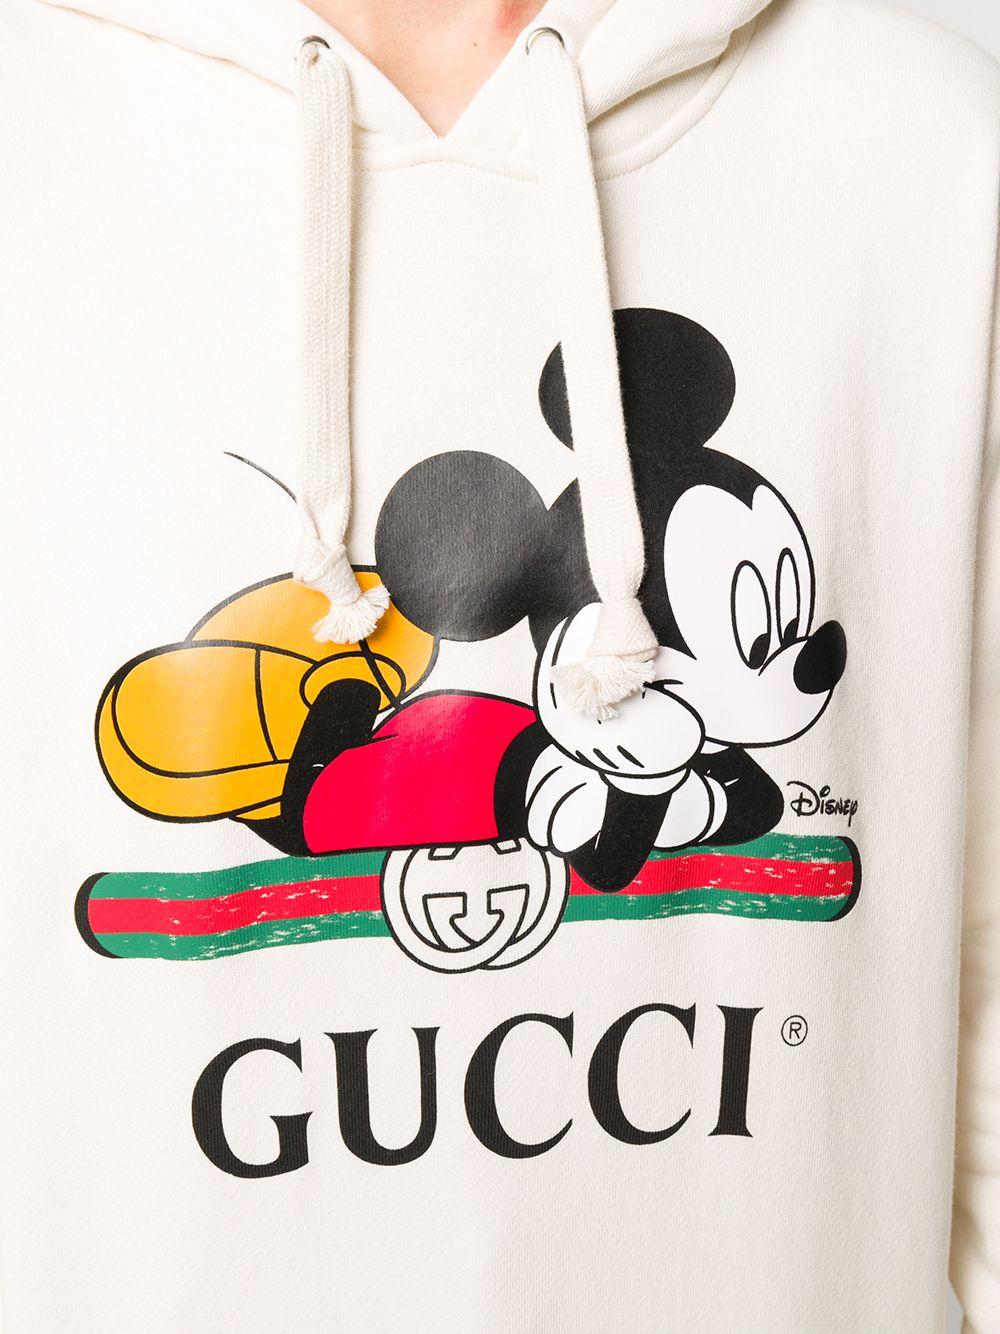 Gucci X Disney Kapuzenpullover mit Micky Maus | Lyst DE